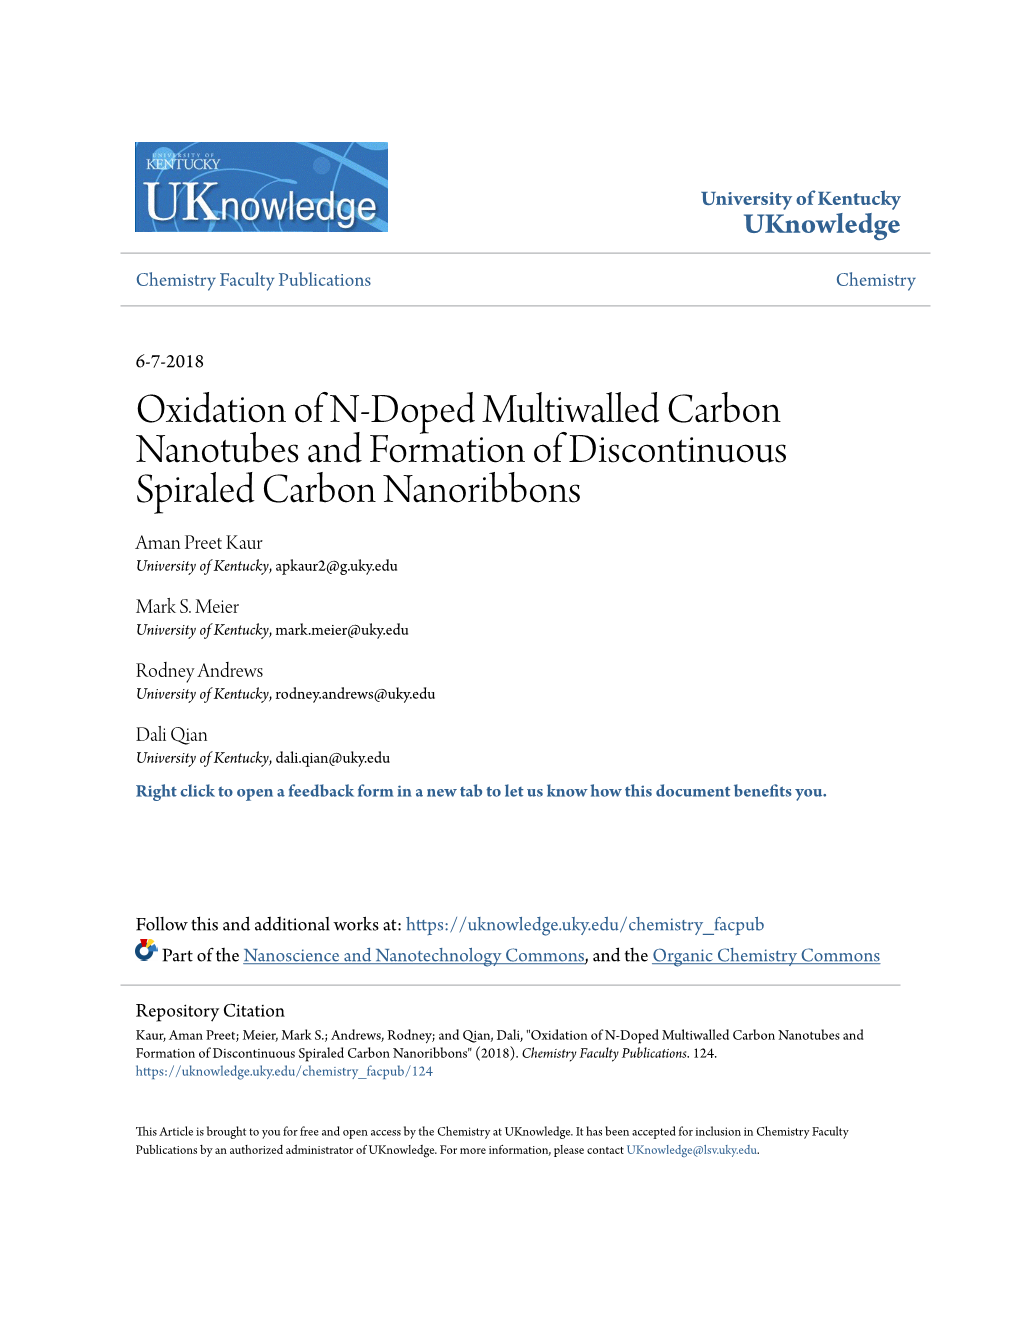 Oxidation of N-Doped Multiwalled Carbon Nanotubes and Formation of Discontinuous Spiraled Carbon Nanoribbons Aman Preet Kaur University of Kentucky, Apkaur2@G.Uky.Edu